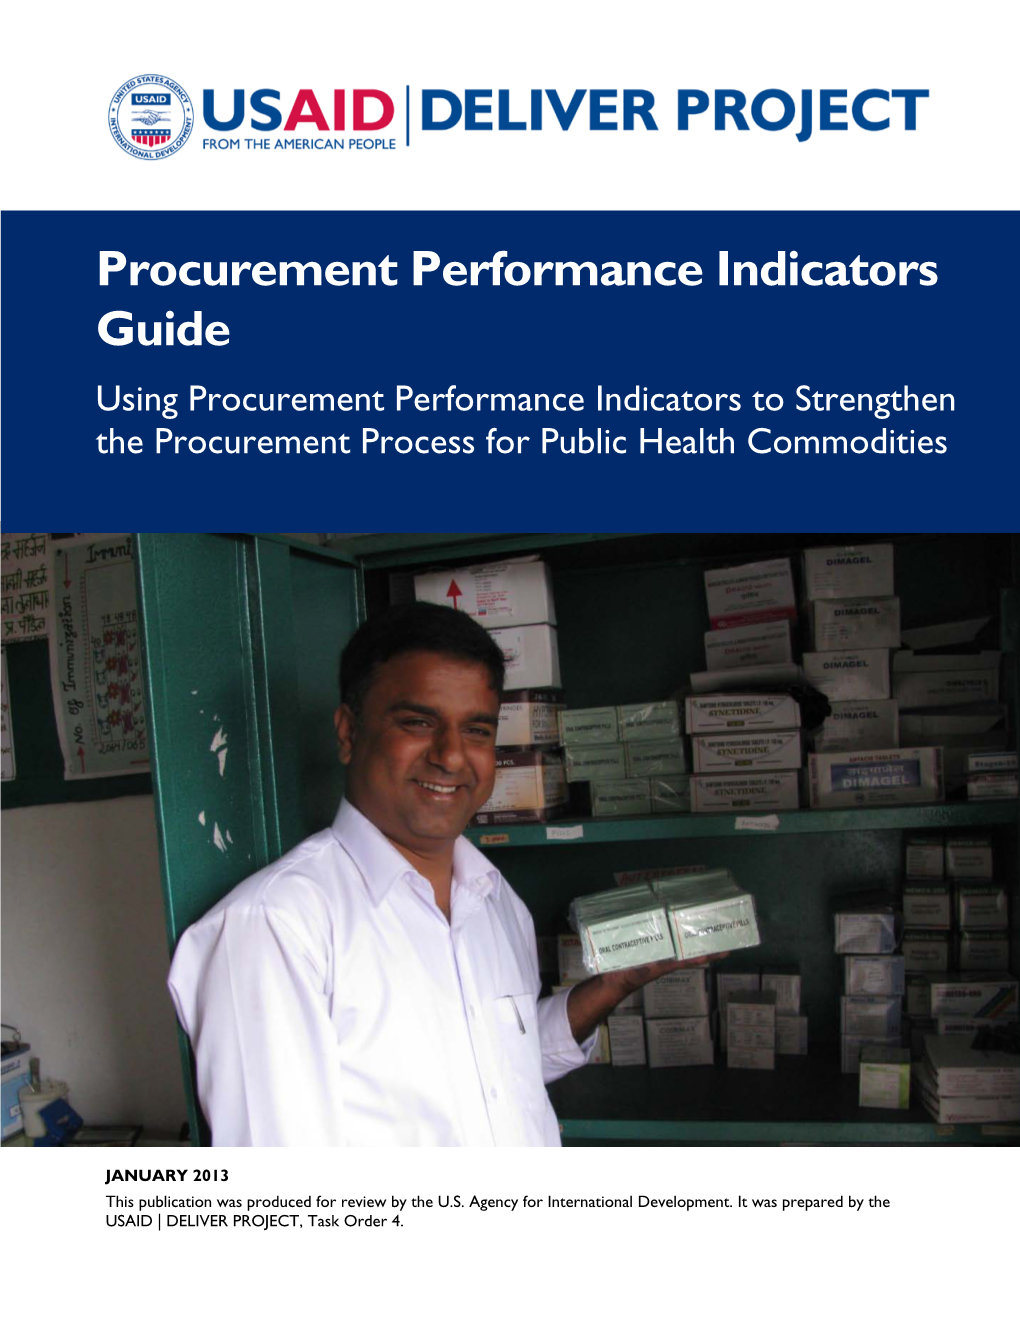 Procurement Performance Indicators Guide Using Procurement Performance Indicators to Strengthen the Procurement Process for Public Health Commodities